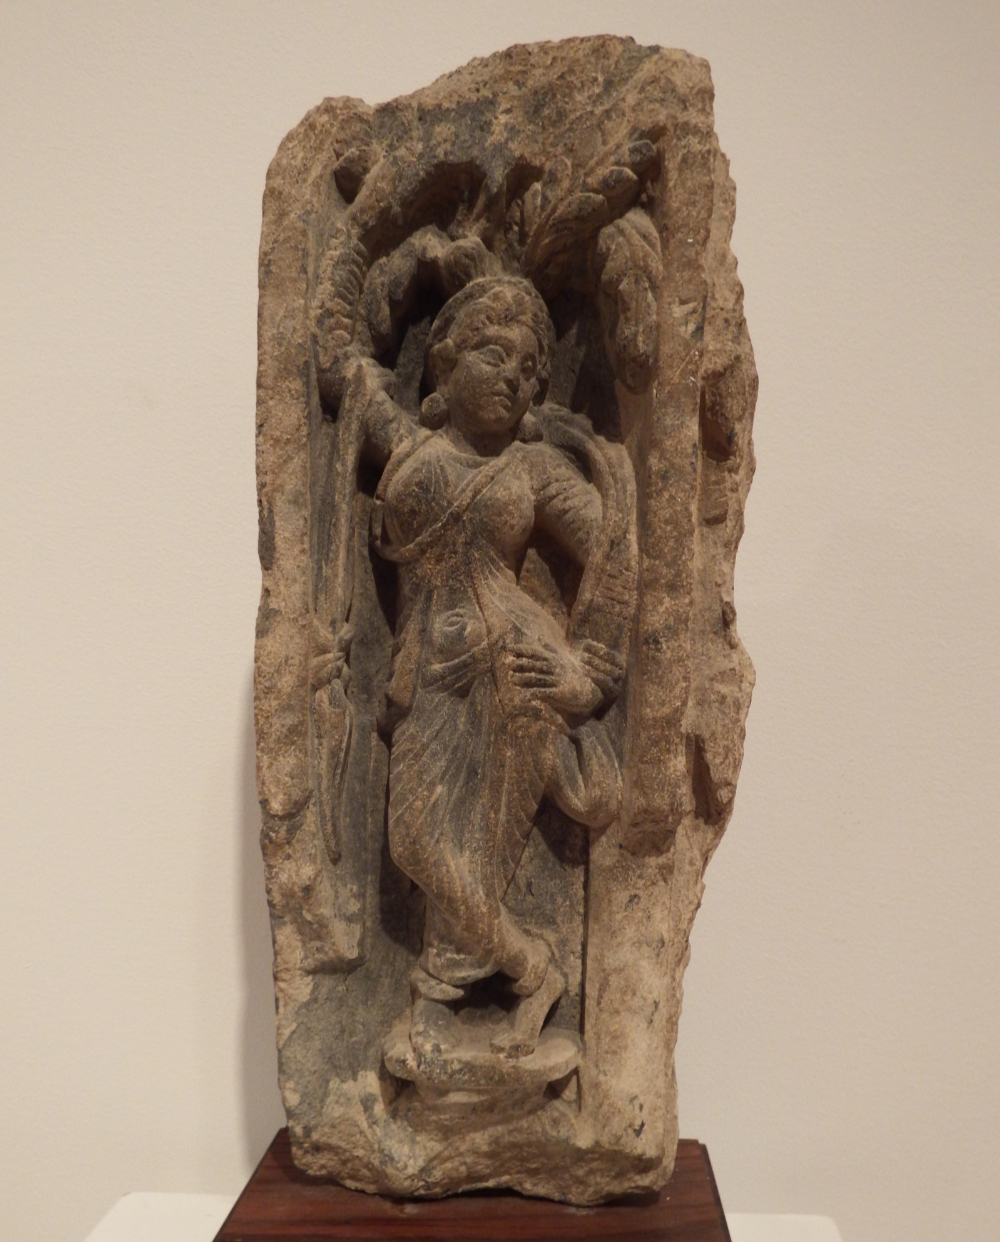 thumbnail of Yakshi Figure from Gandhara region. medium: Grey schist stone. date: 2nd century A.D.